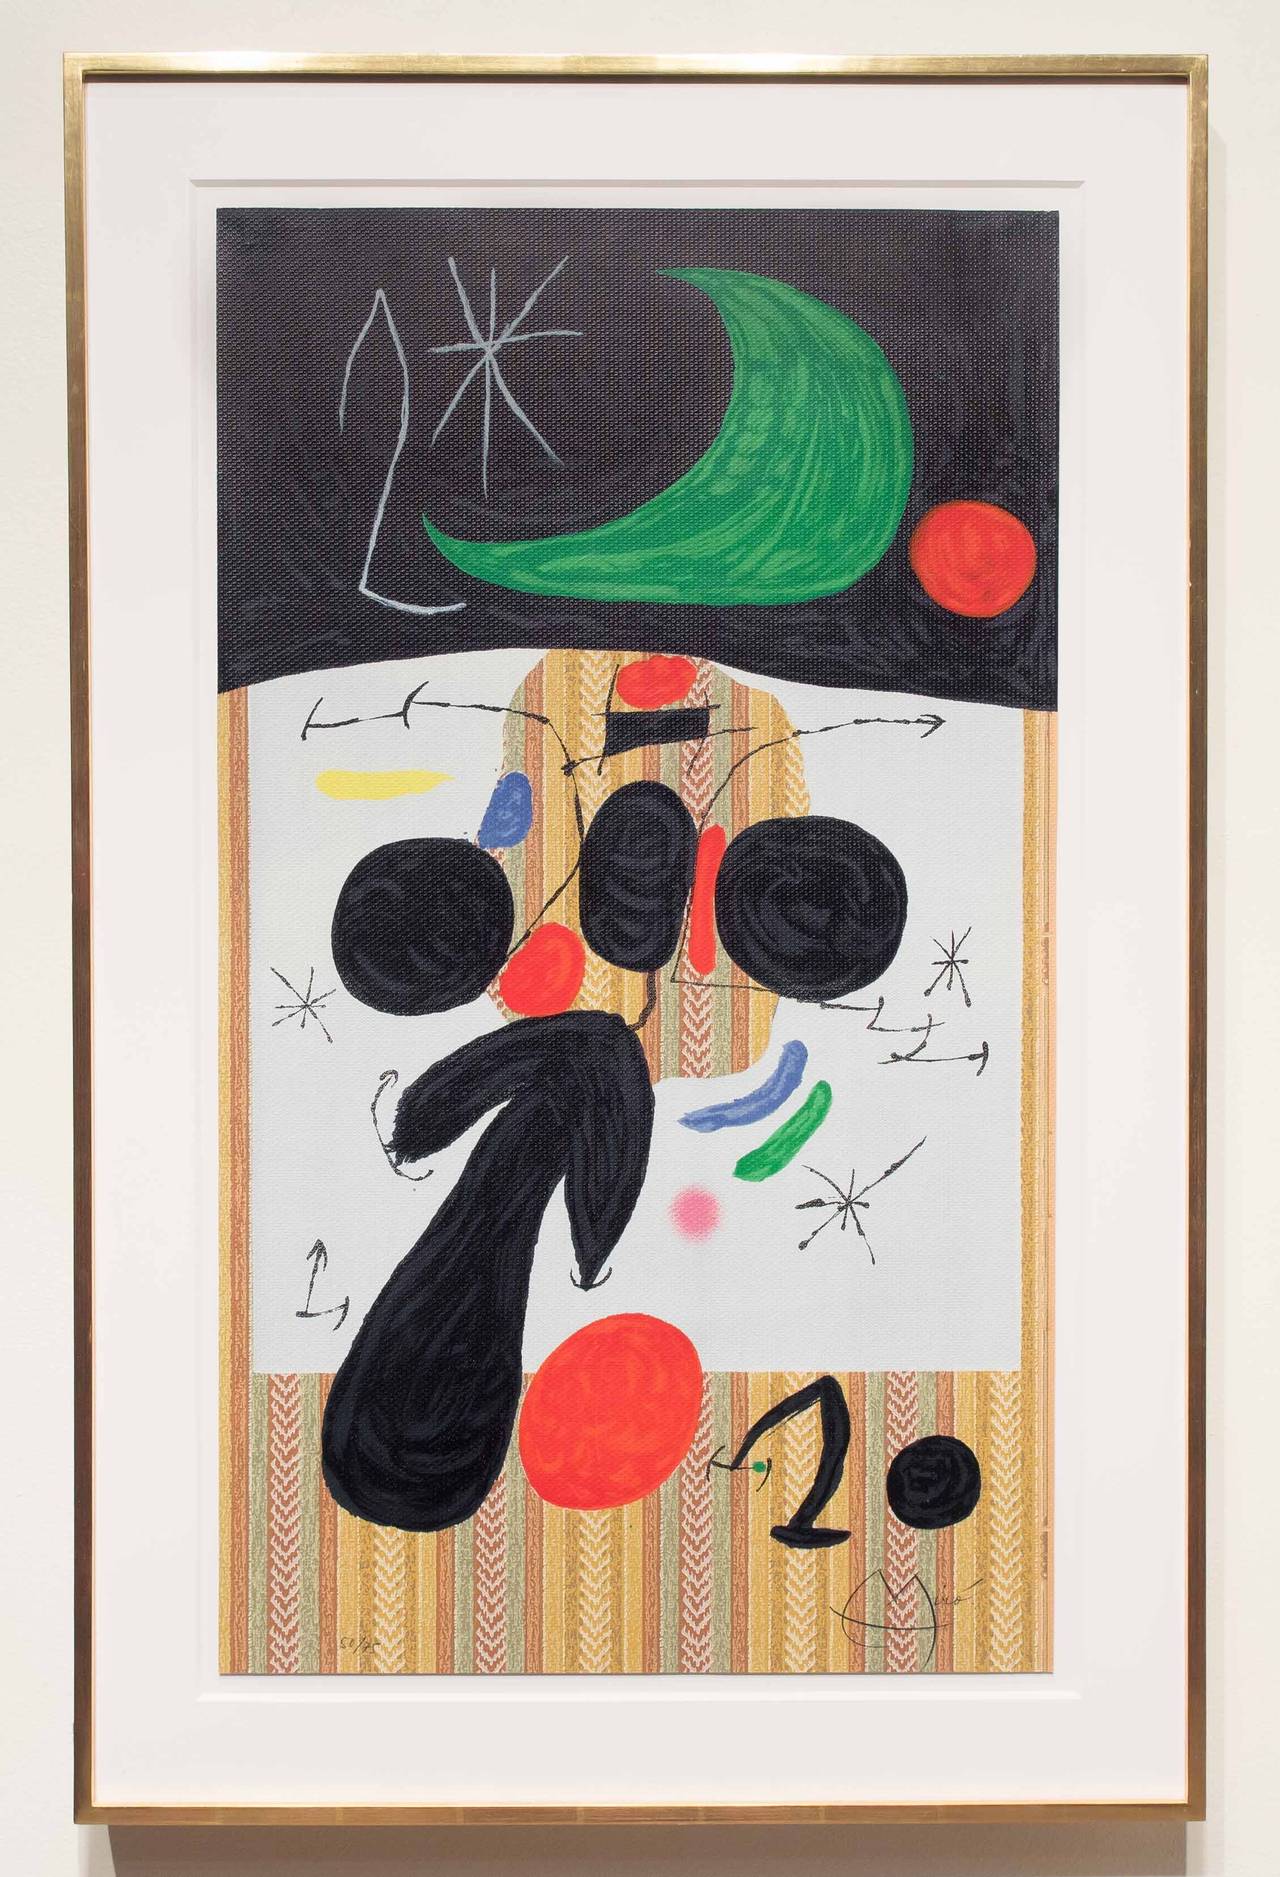 Interieur et Nuit - Modern Print by Joan Miró